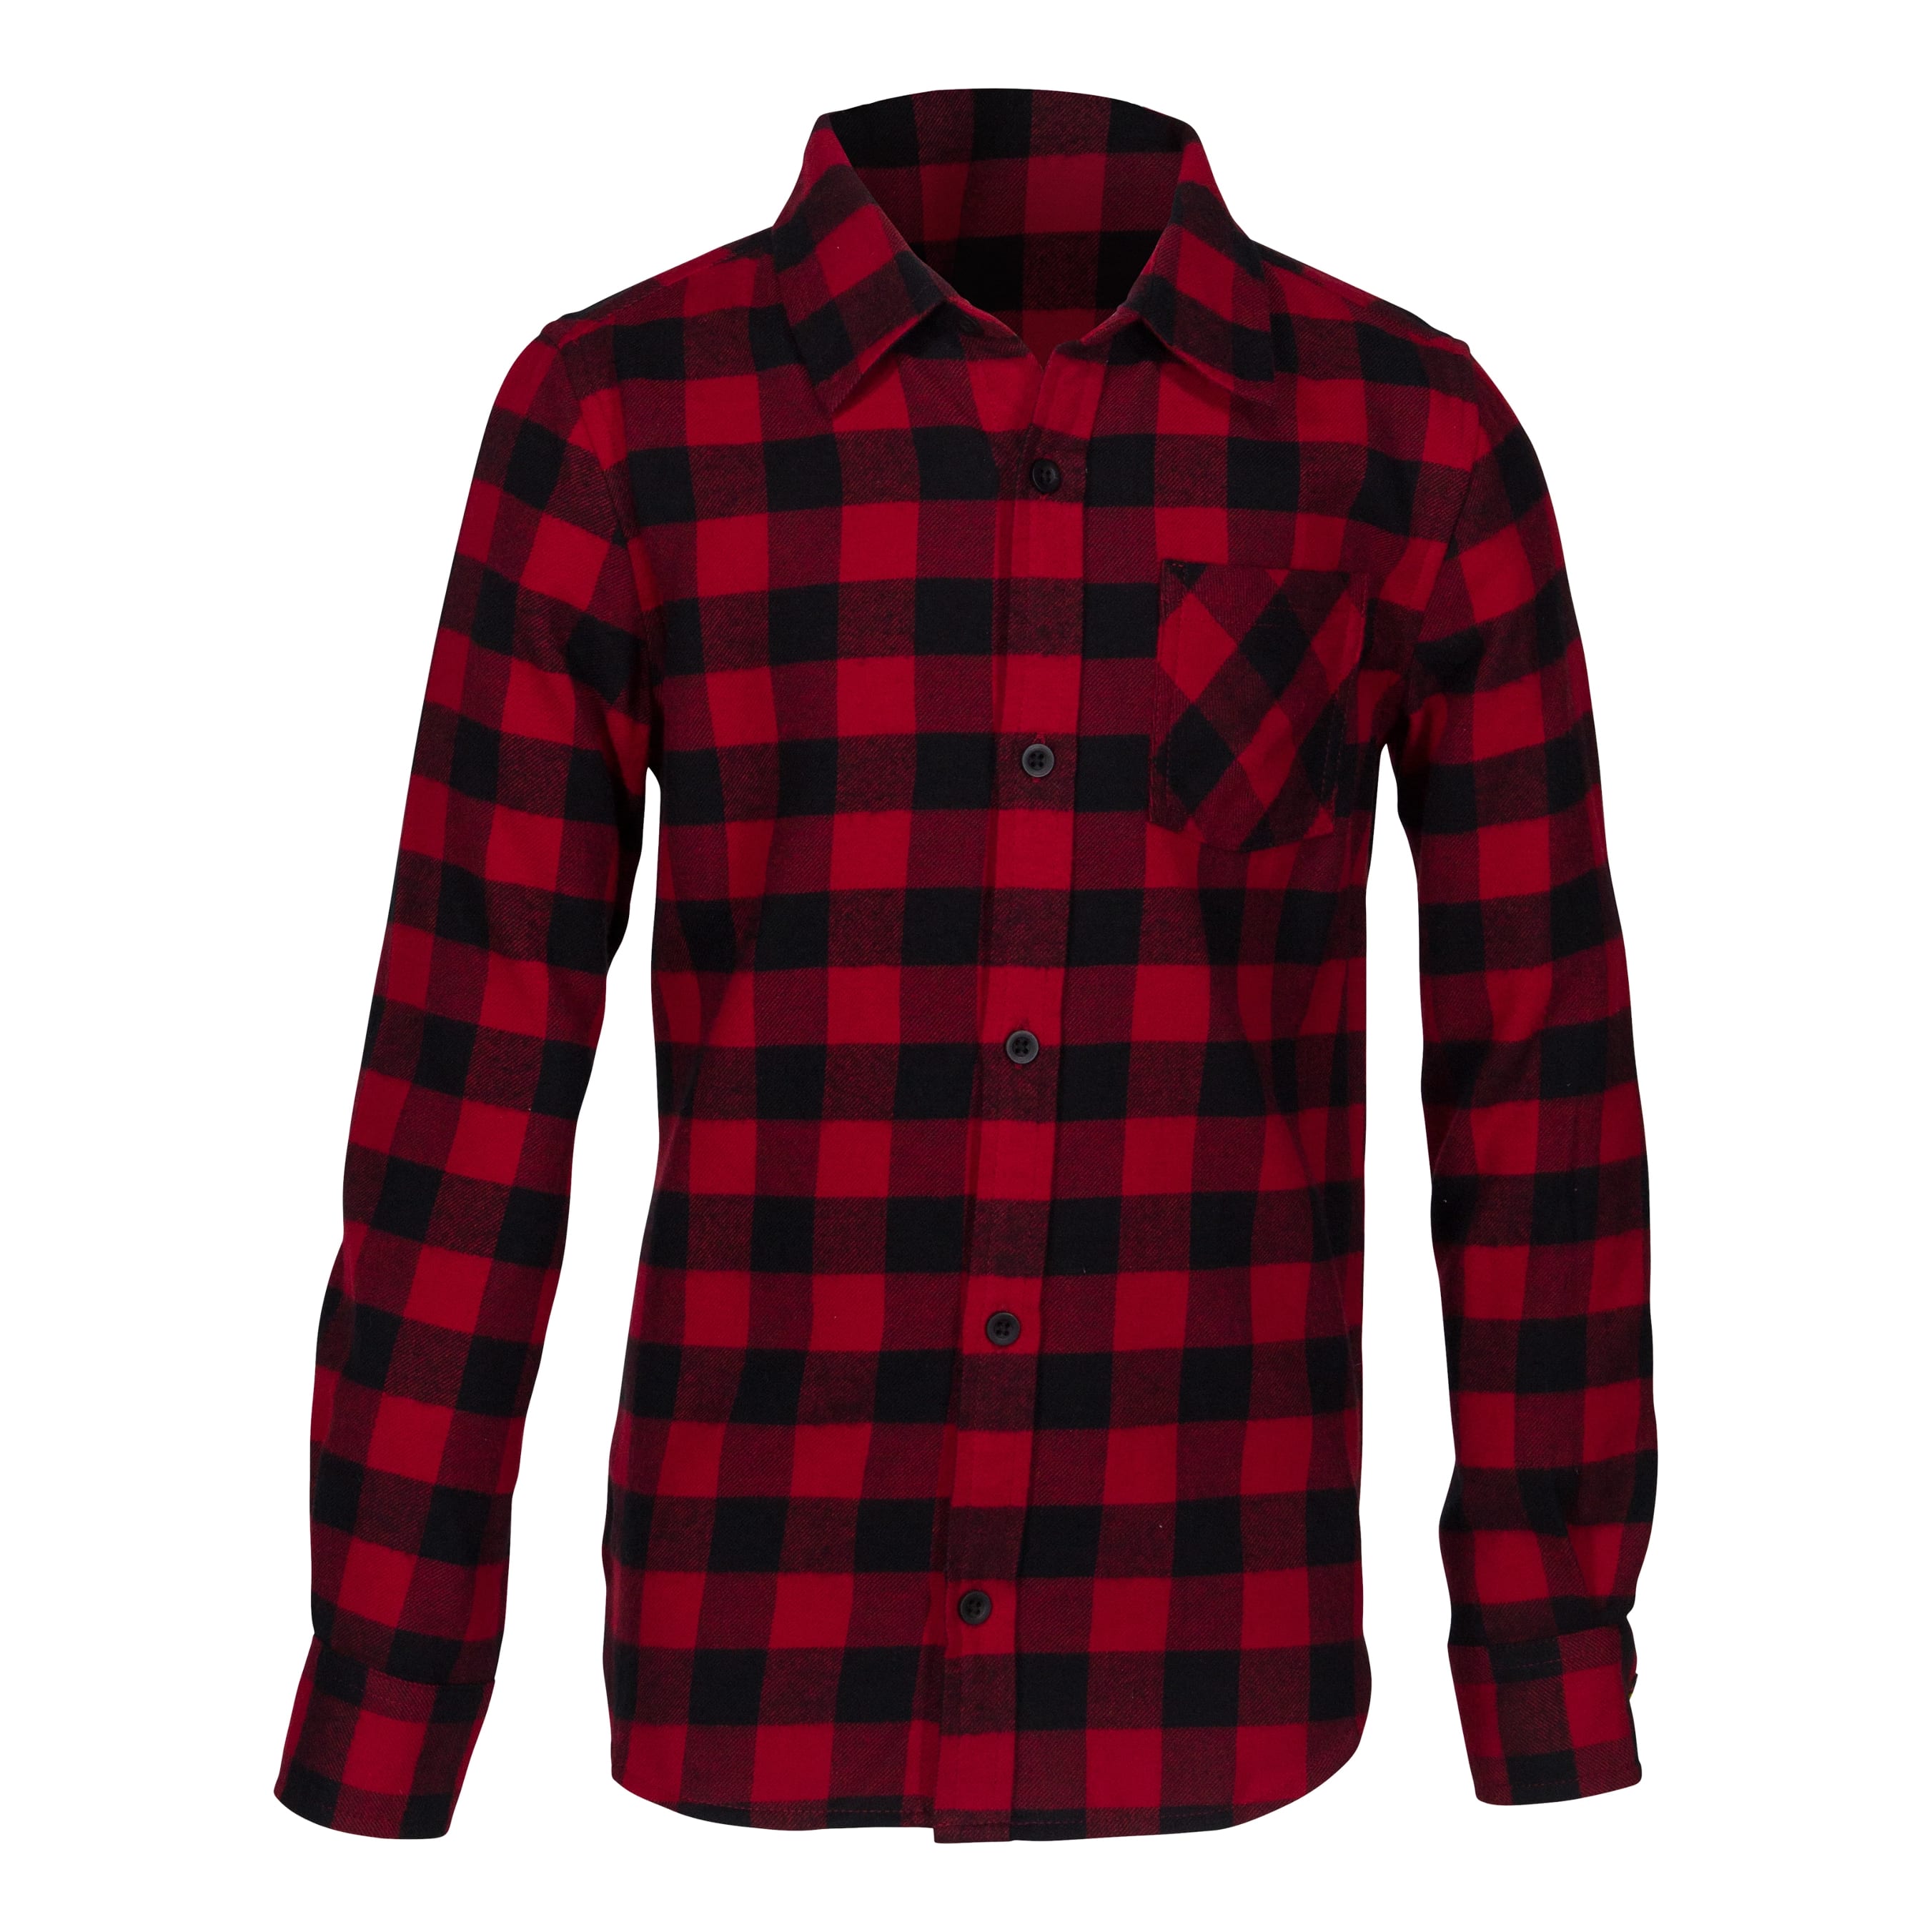 Outdoor Kids Boys' Long-Sleeve Flannel Shirt - Red/Black Buffalo